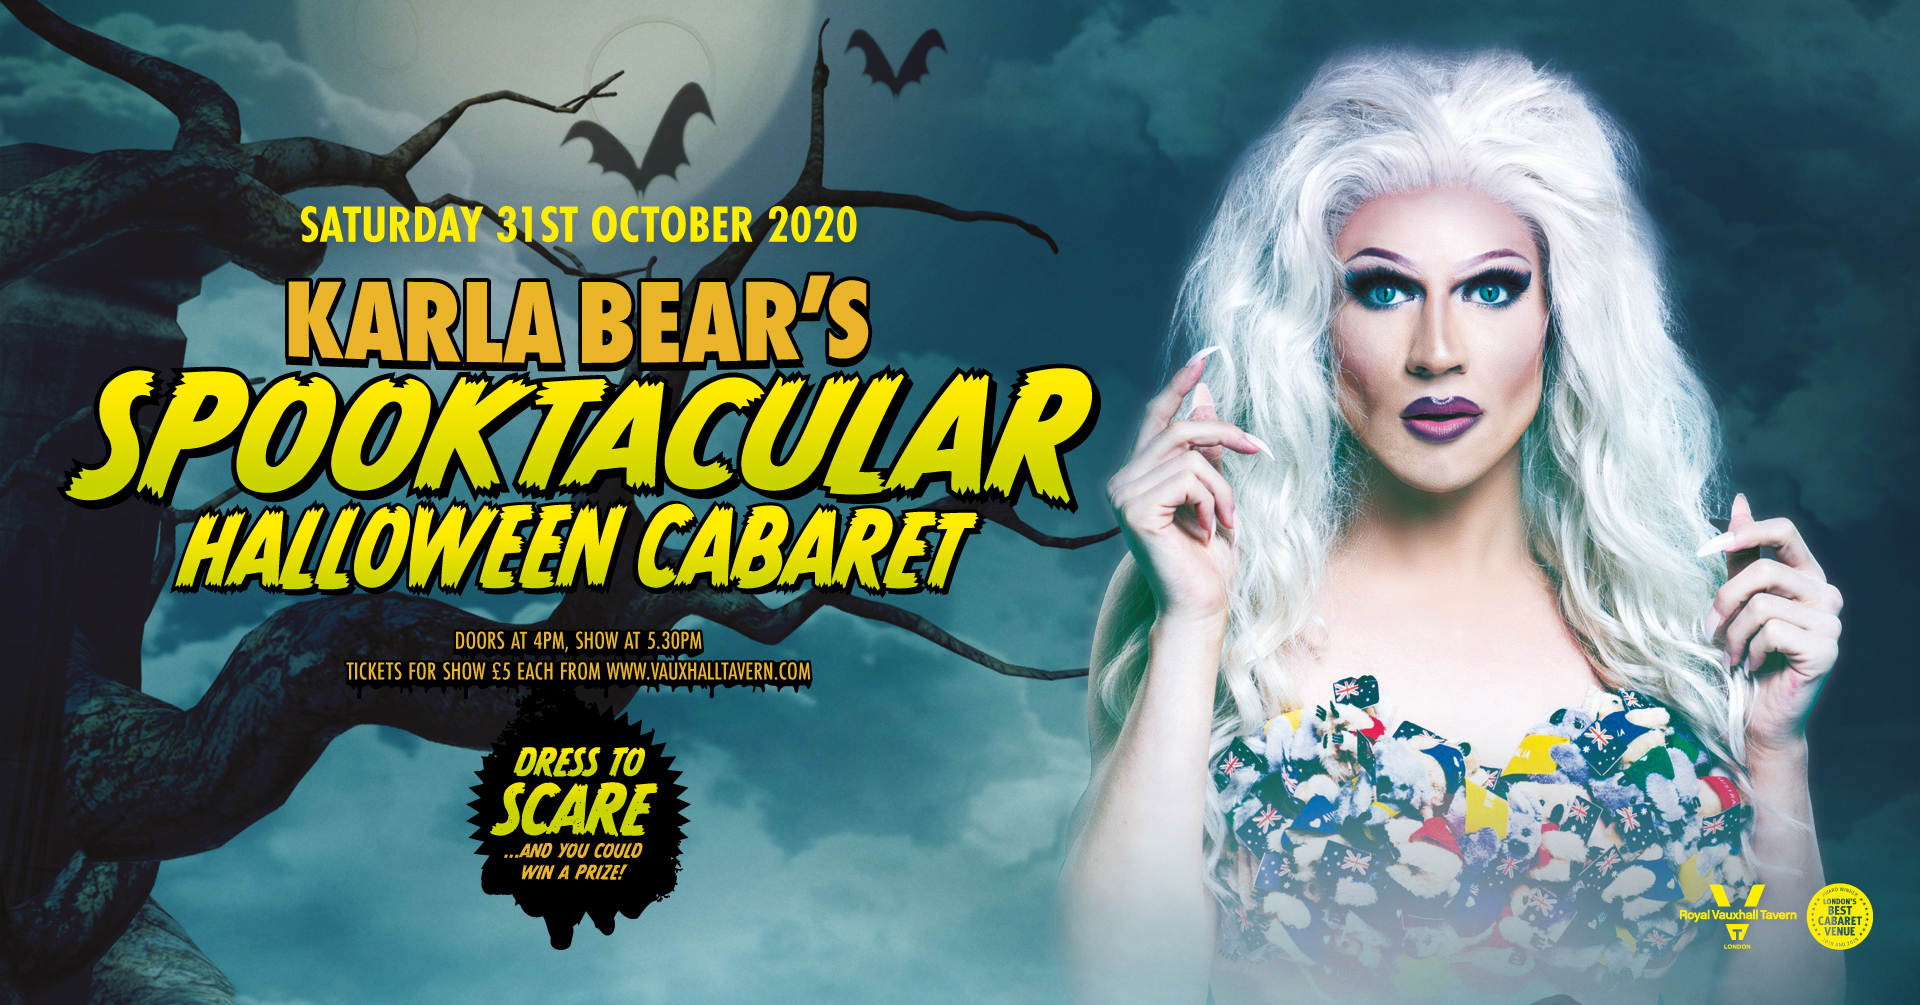 Karla Bear's Spooktacular Halloween Cabaret